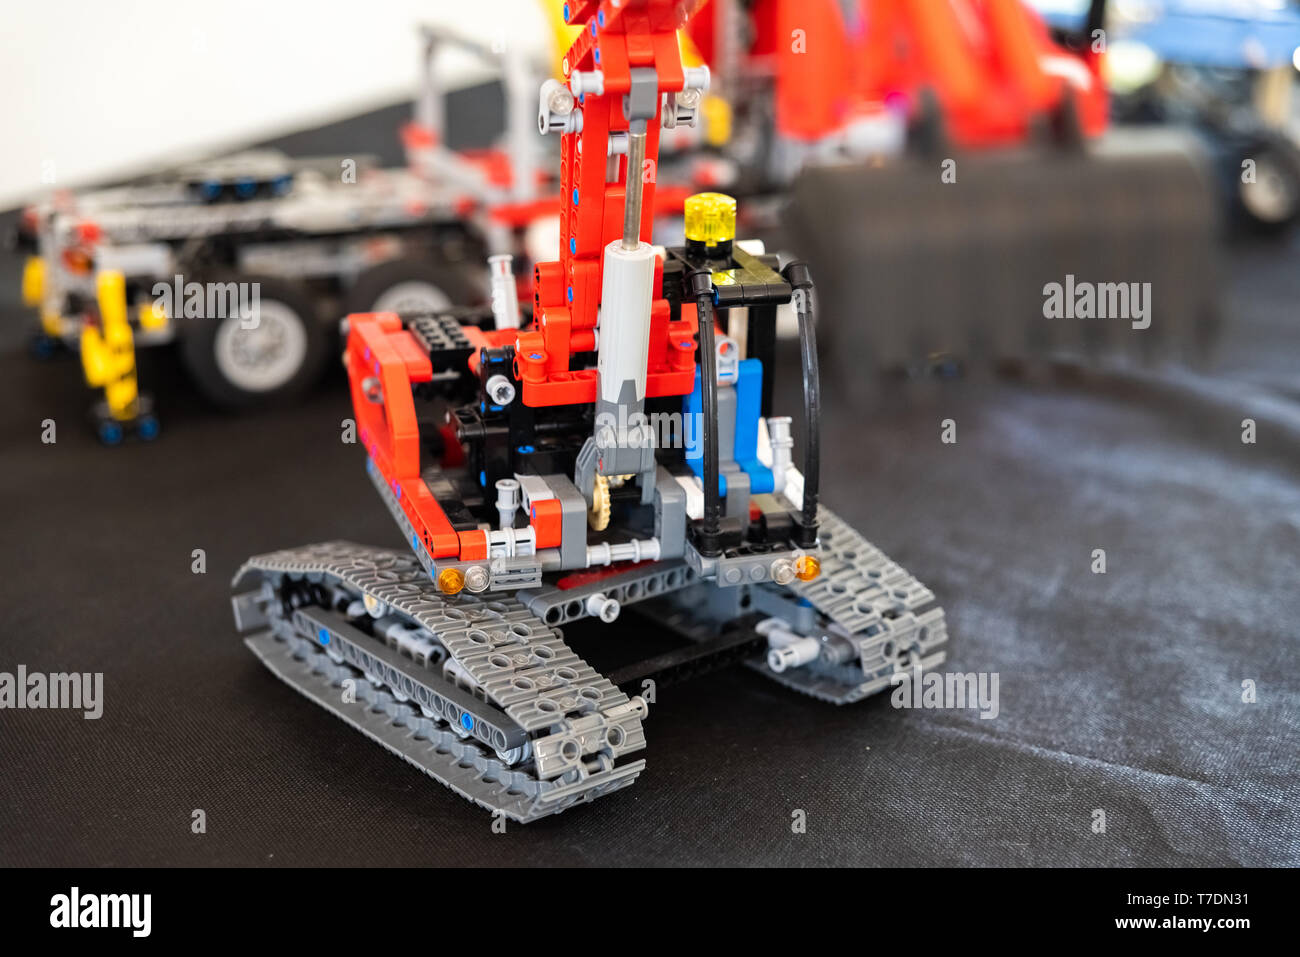 Valencia, Spanien - 3. April 2019: Spielzeug Bagger mit Lego Bausteinen  Stockfotografie - Alamy